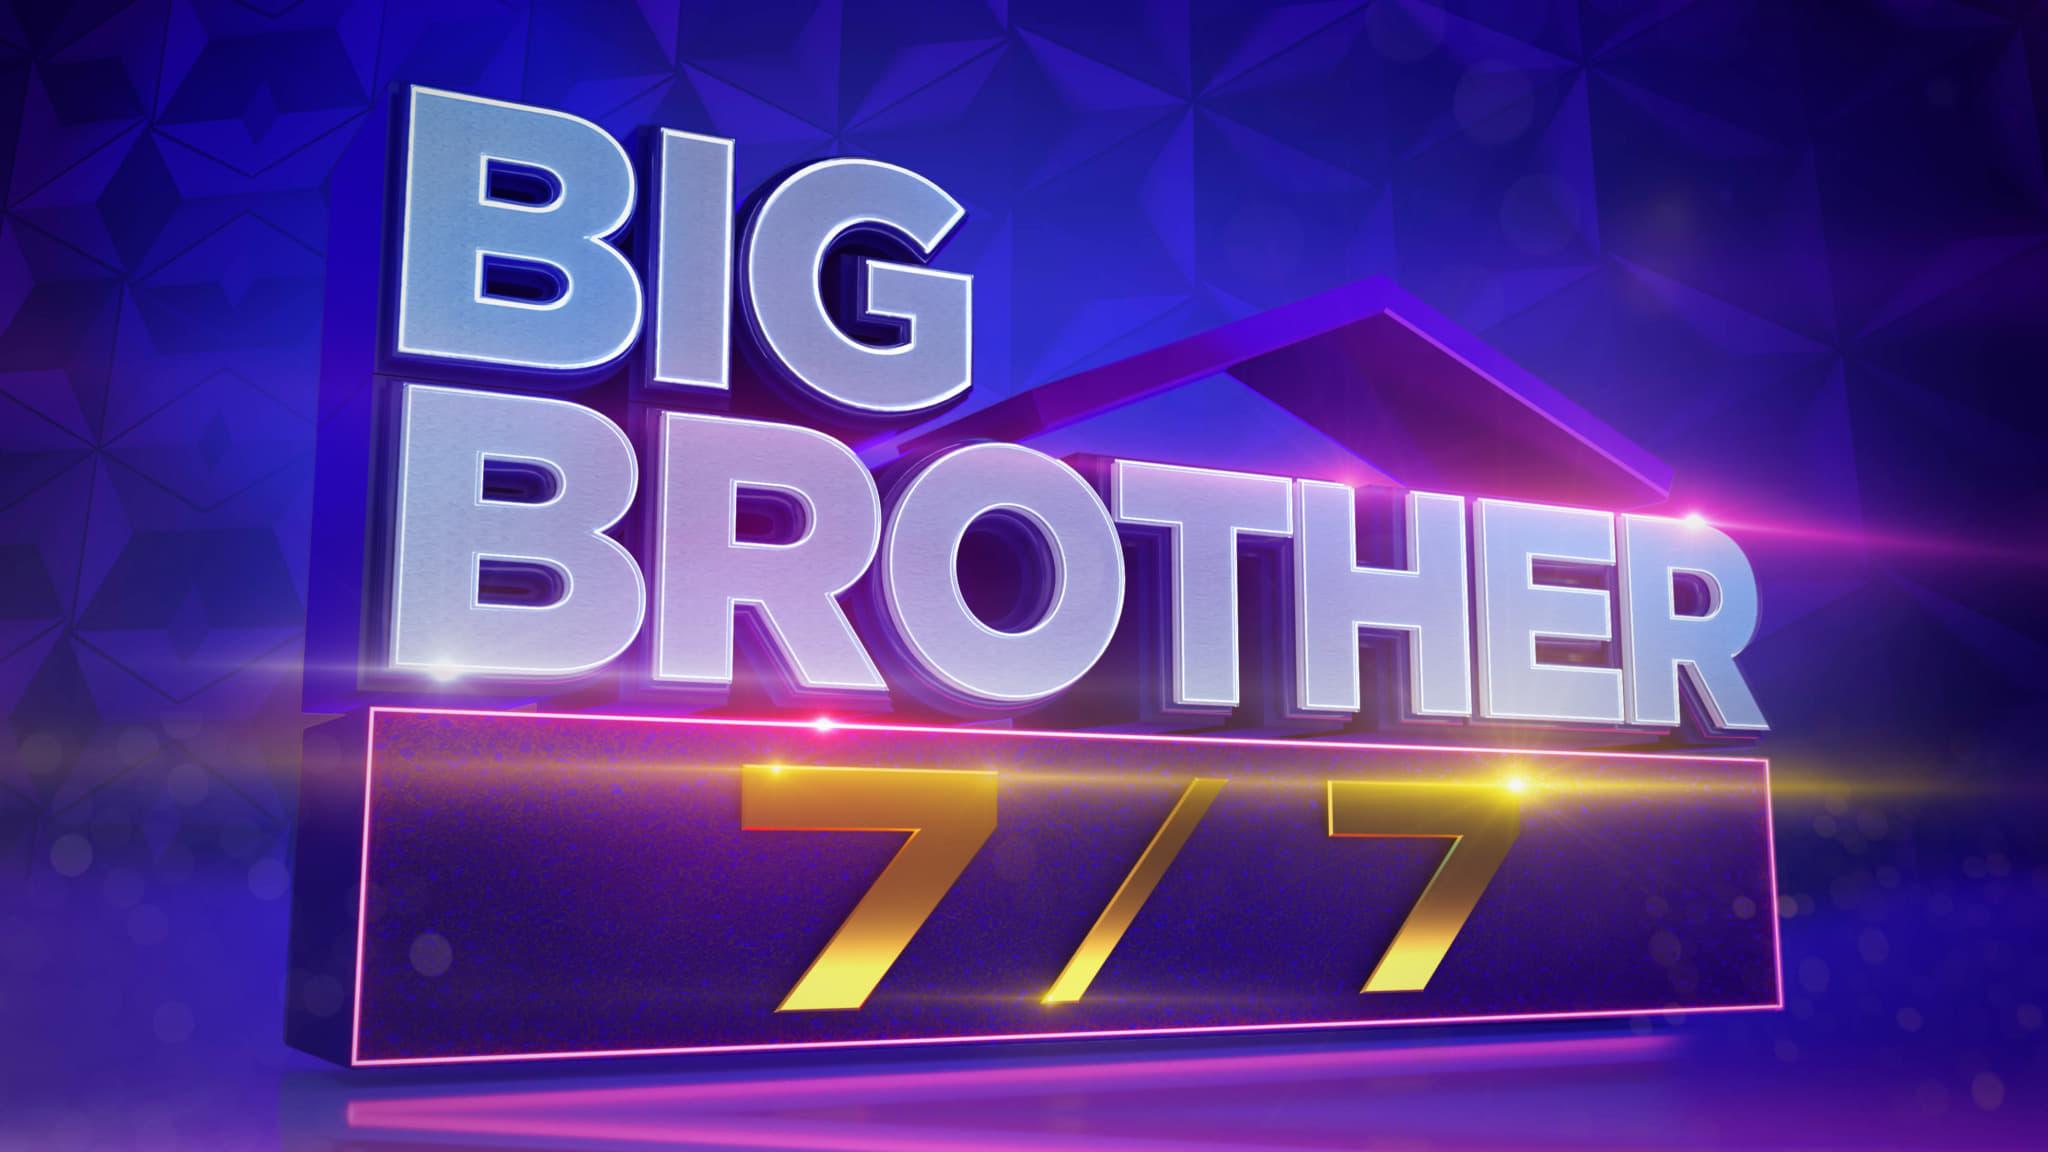 Big Brother 7/7 backdrop